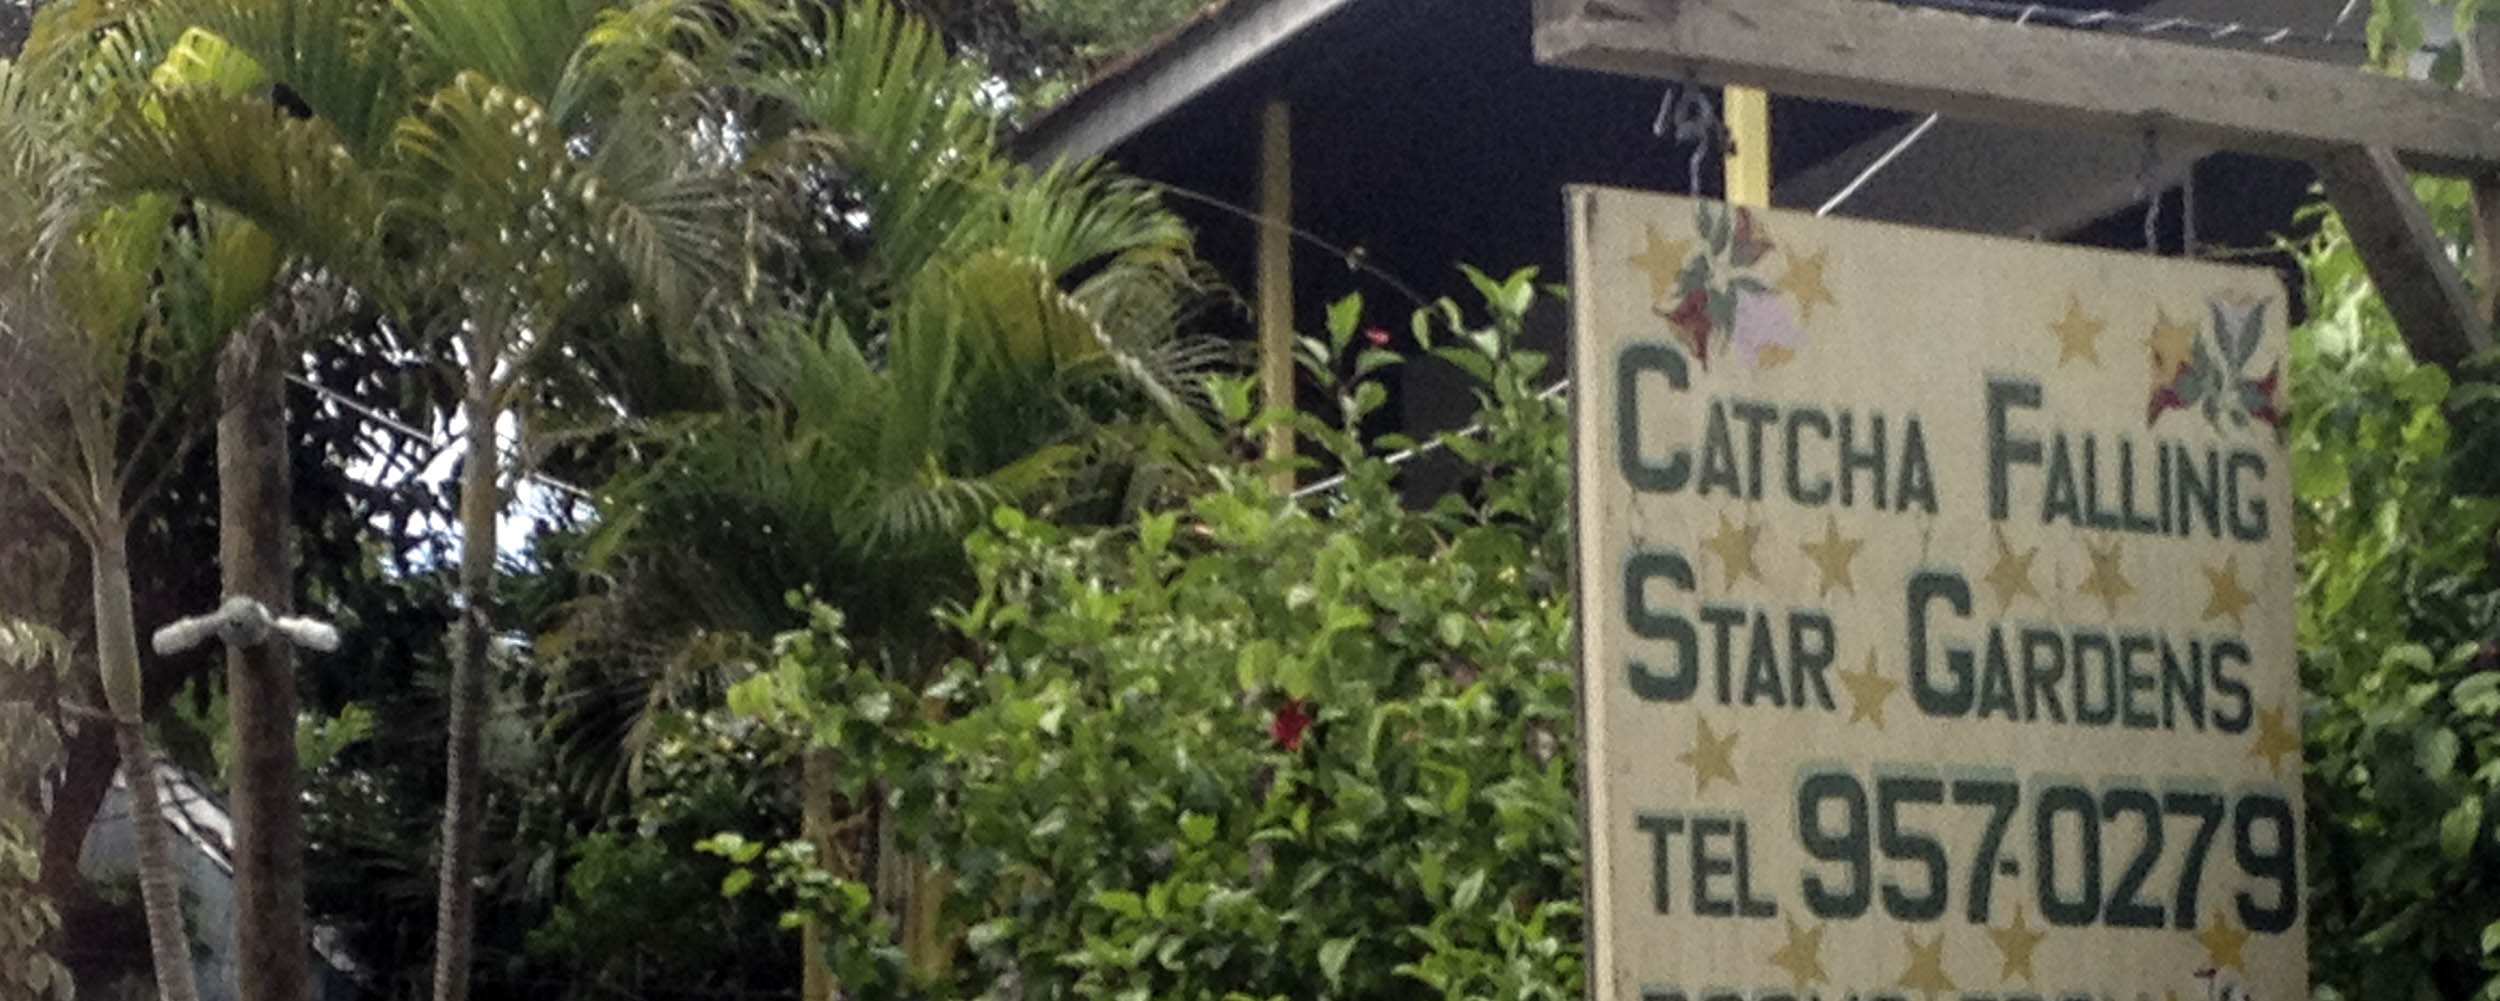 Catcha Falling Star Garden - Negril Jamaica